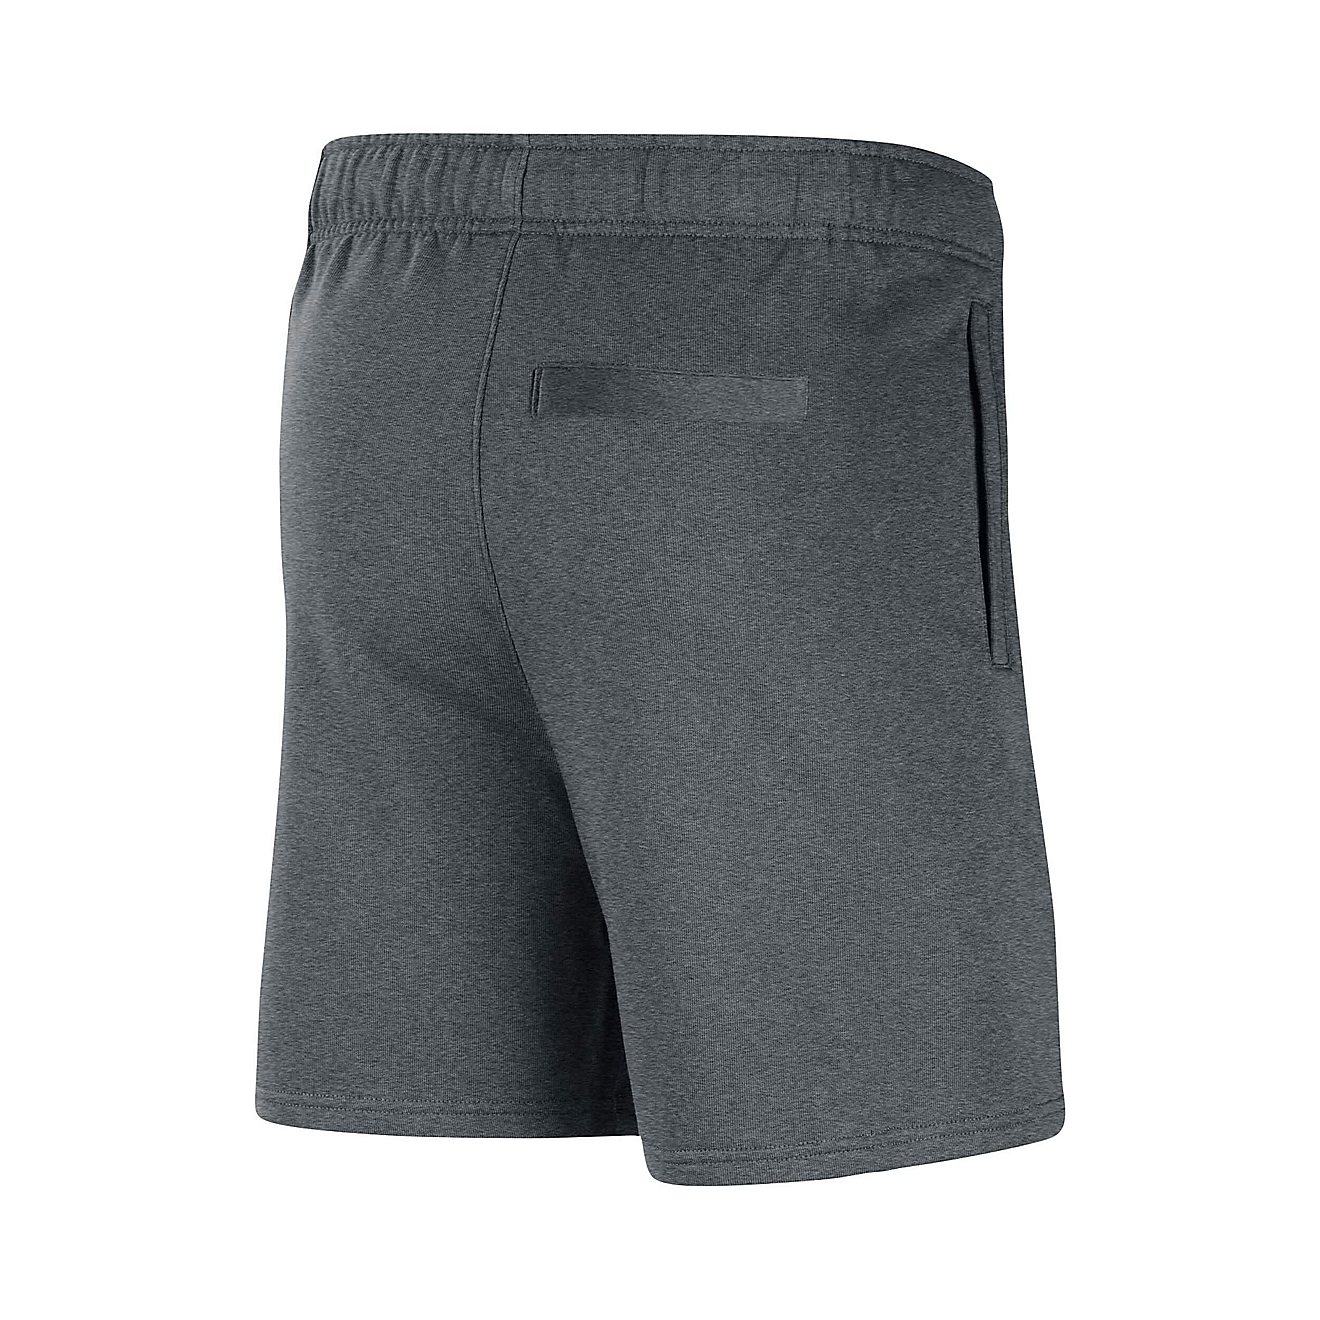 Nike LSU Tigers Fleece Shorts | Free Shipping at Academy